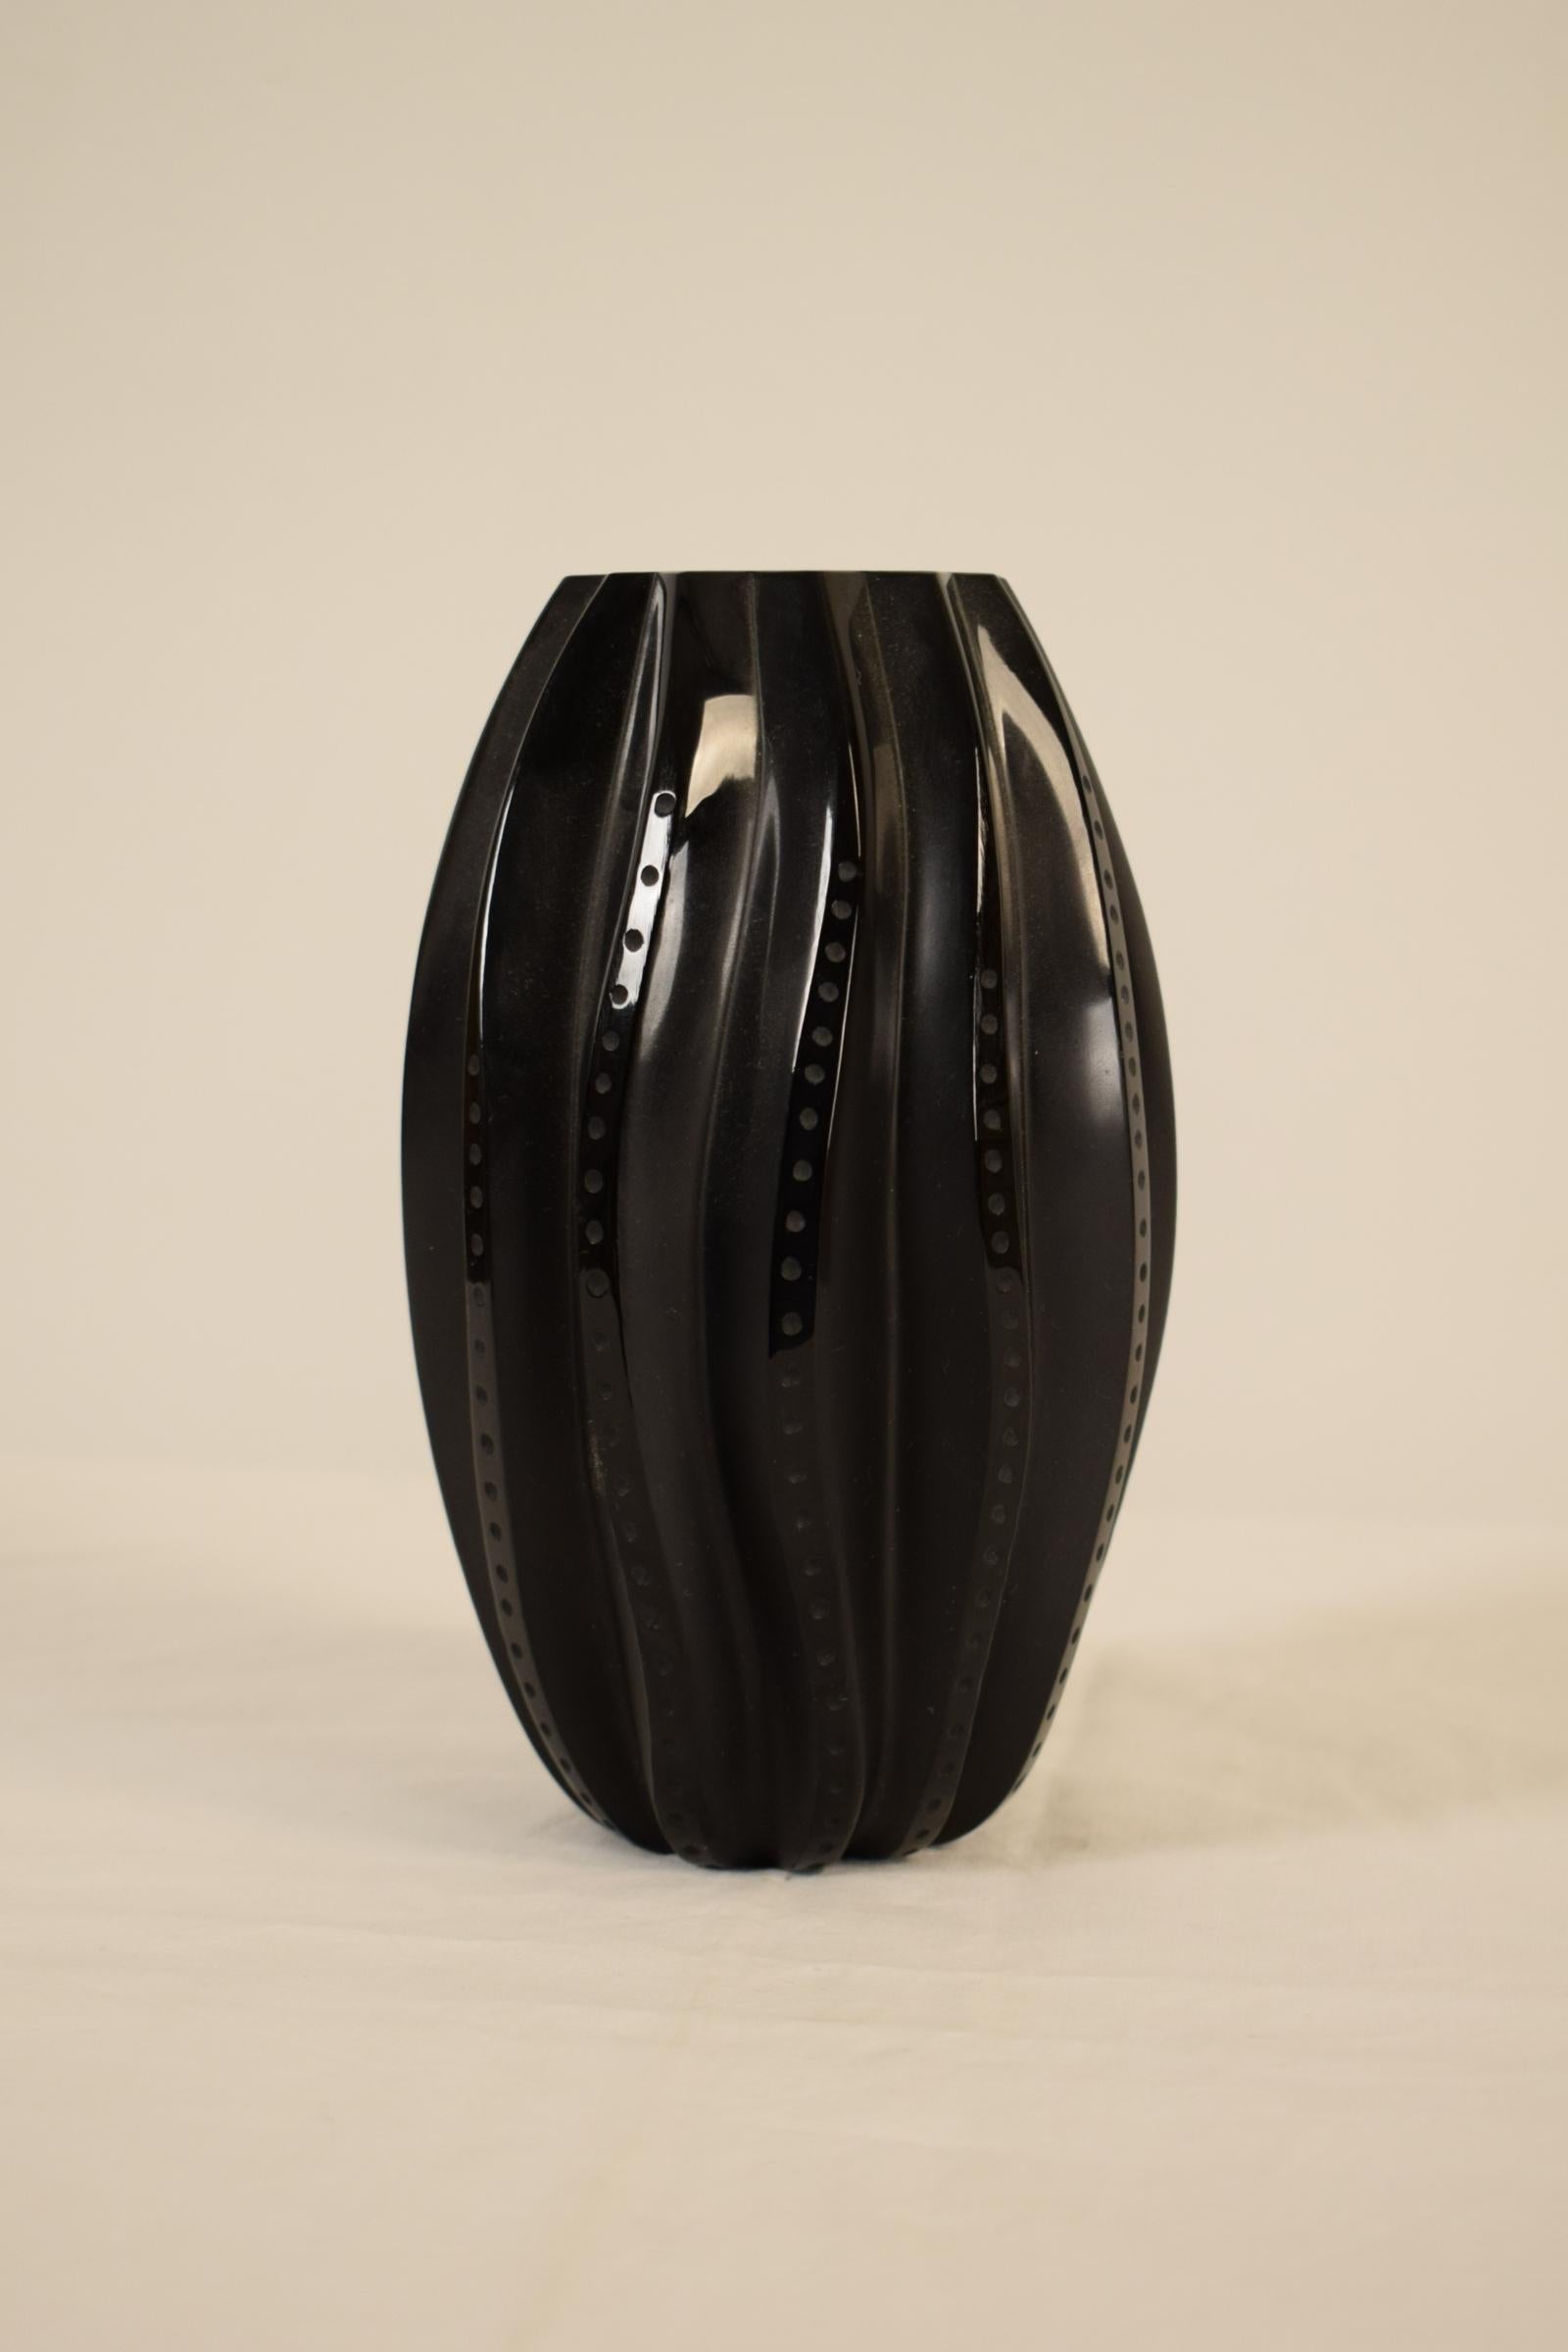 Vase in black glass
Signed René Lalique 